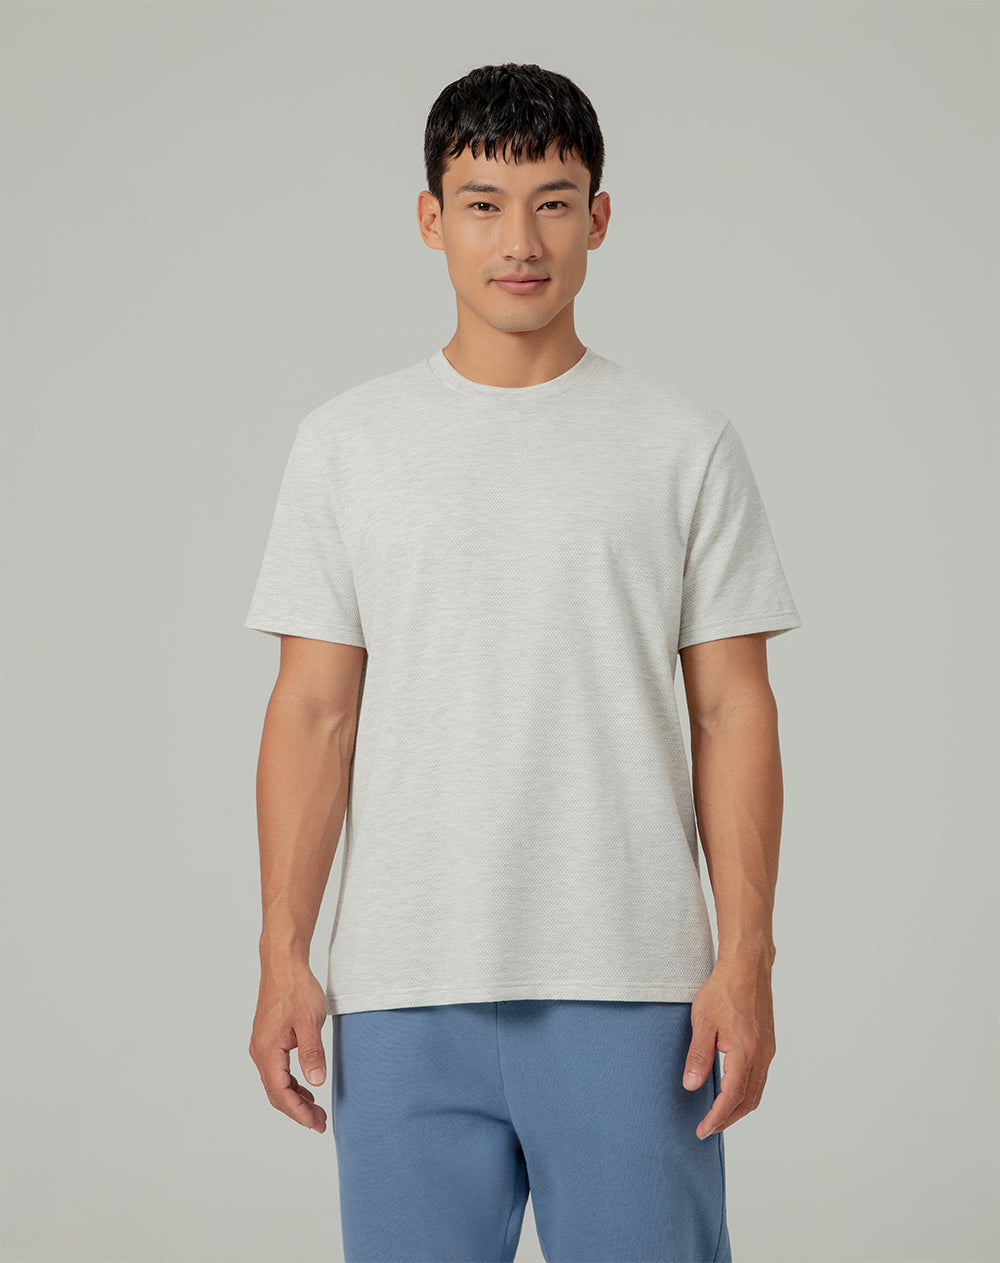 Camiseta regular fit manga corta gris jaspeada